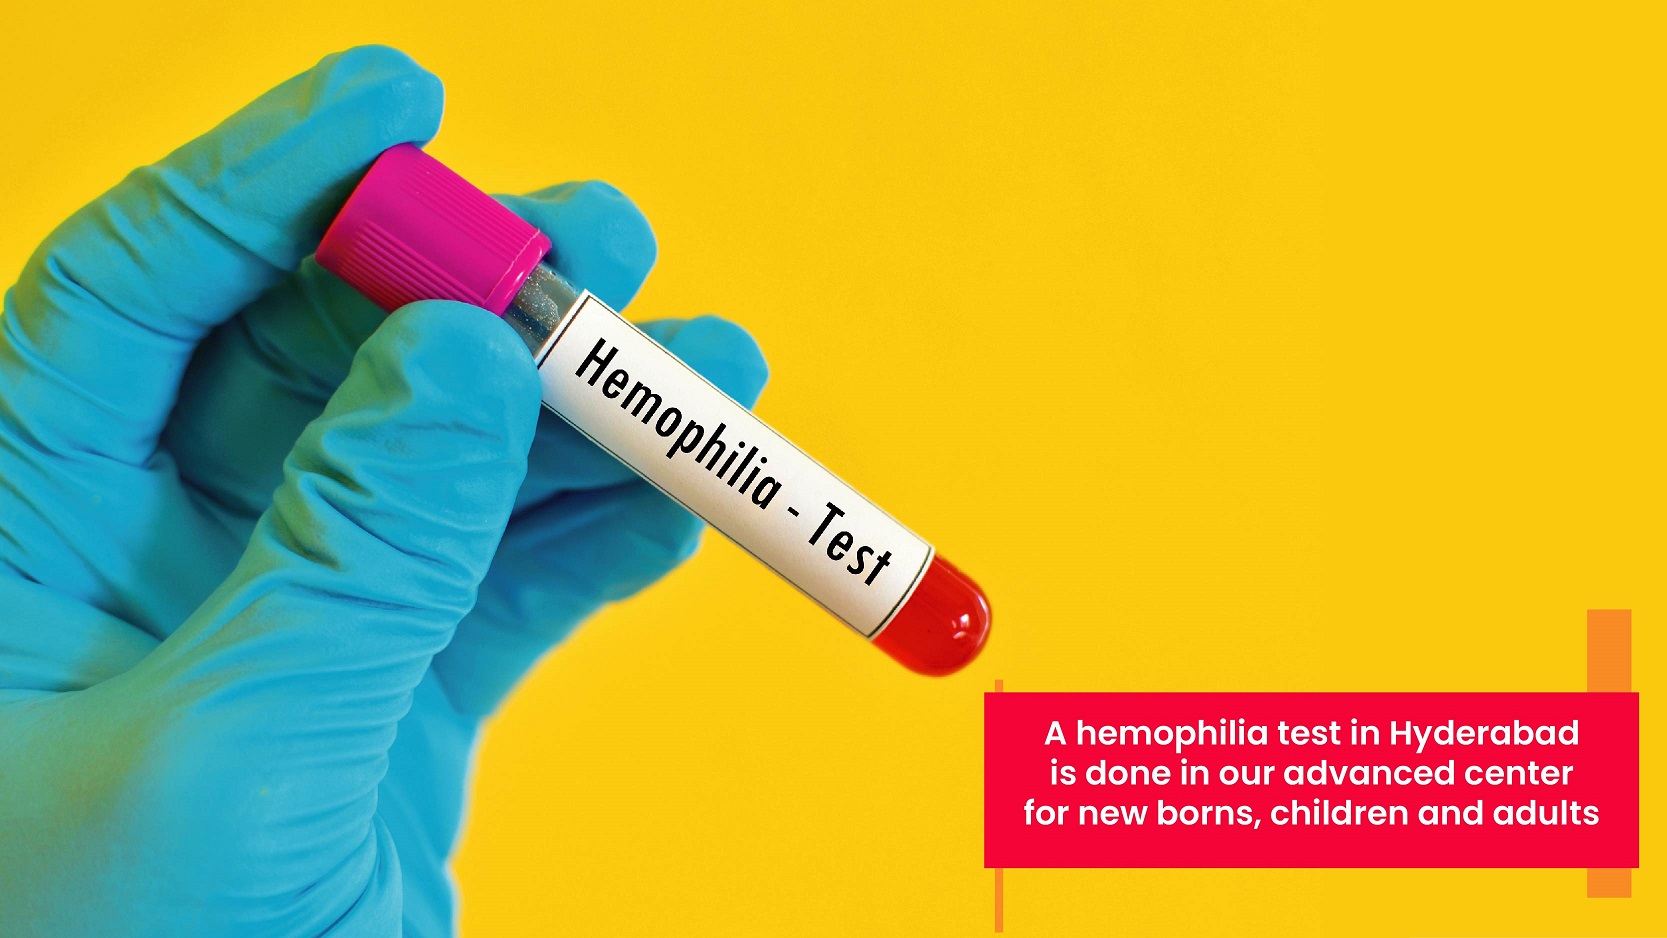 http://avignadiagnostics.com/creating-clarity/hemophilia-awareness/A hemophilia test in Hyderabad